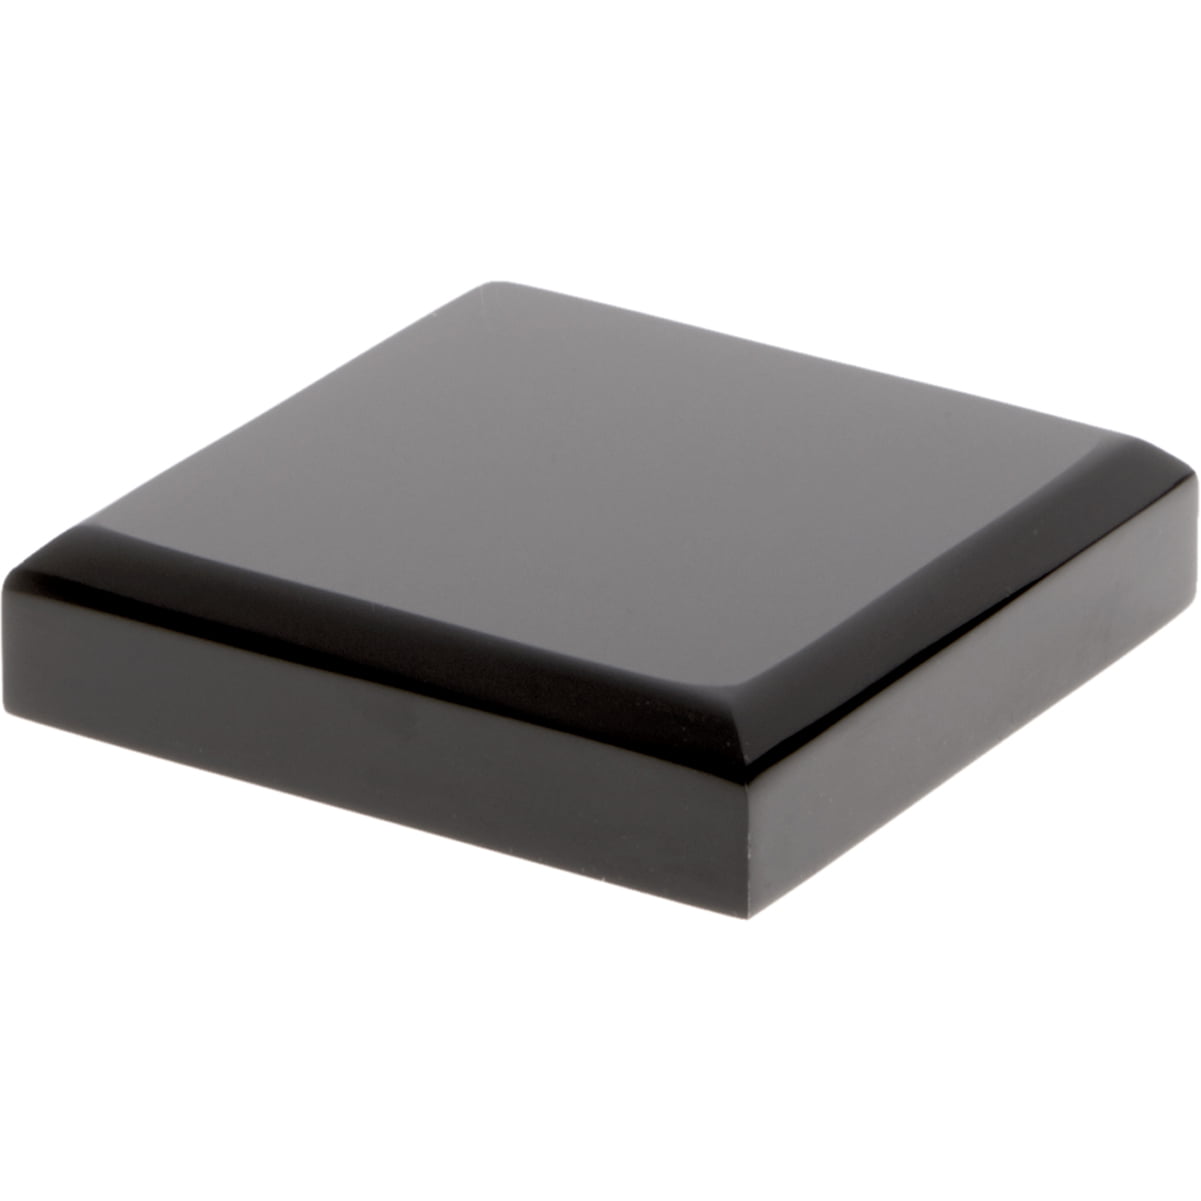 Plymor Brand Black Acrylic Square Beveled Display Base.75 H x 5 W x 5 D